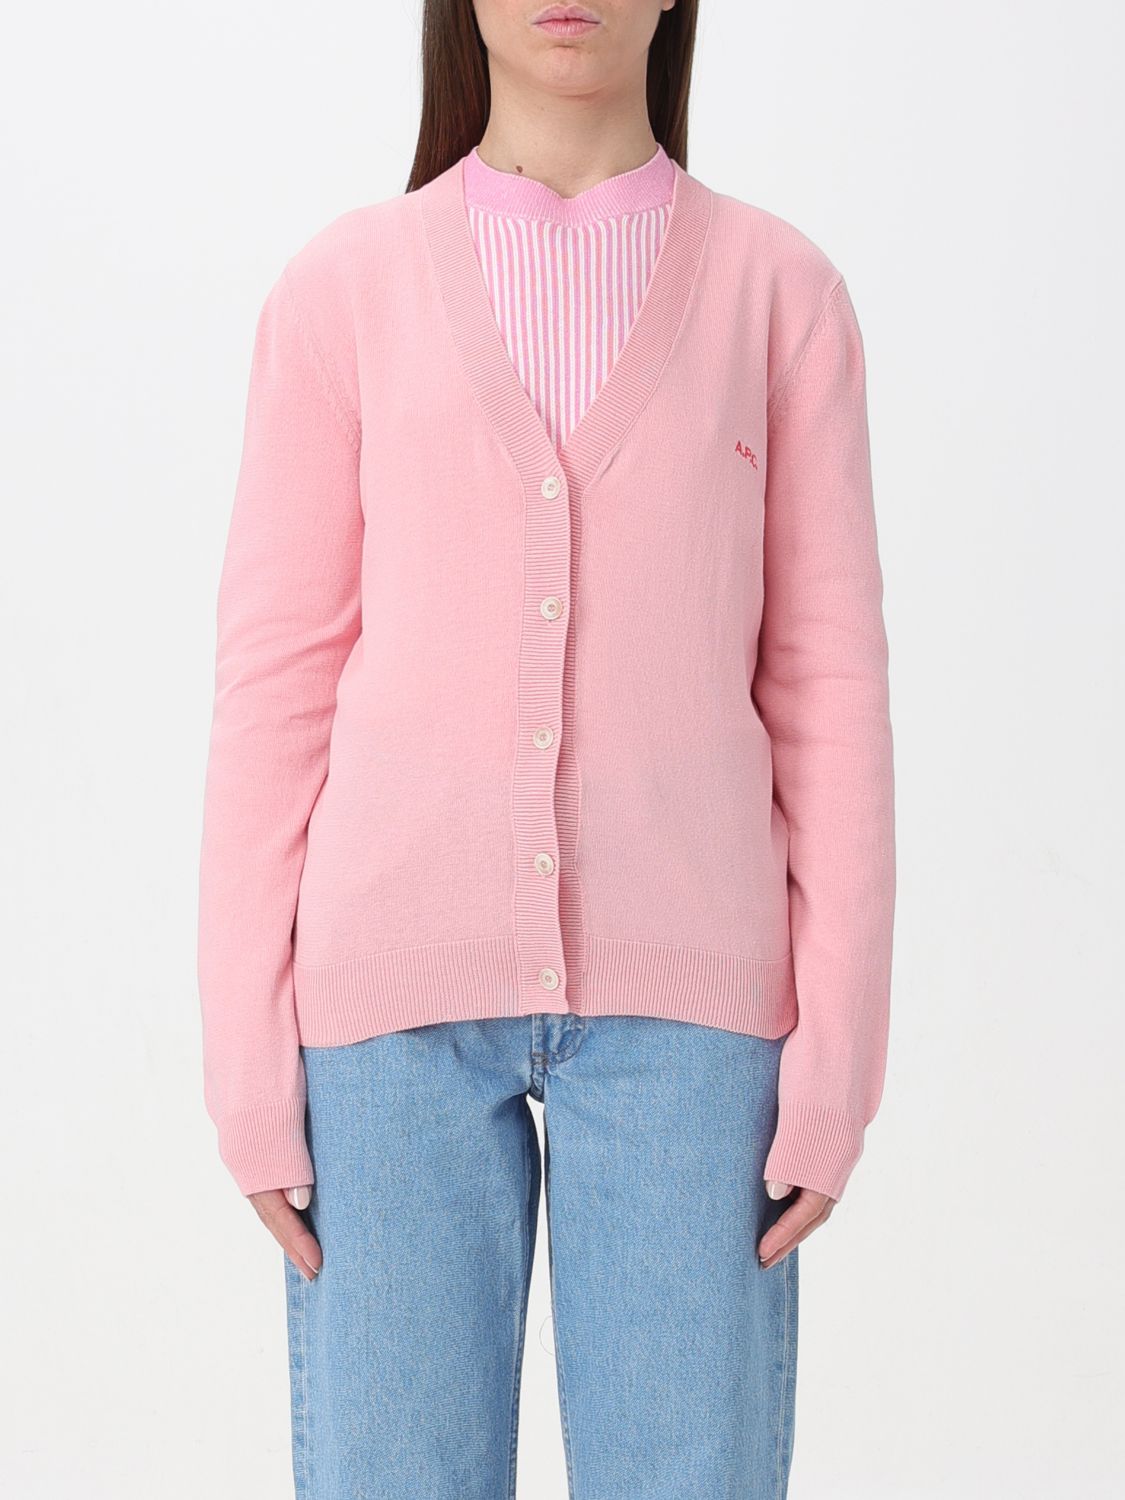 Shop Apc Cardigan A.p.c. Woman Color Pink